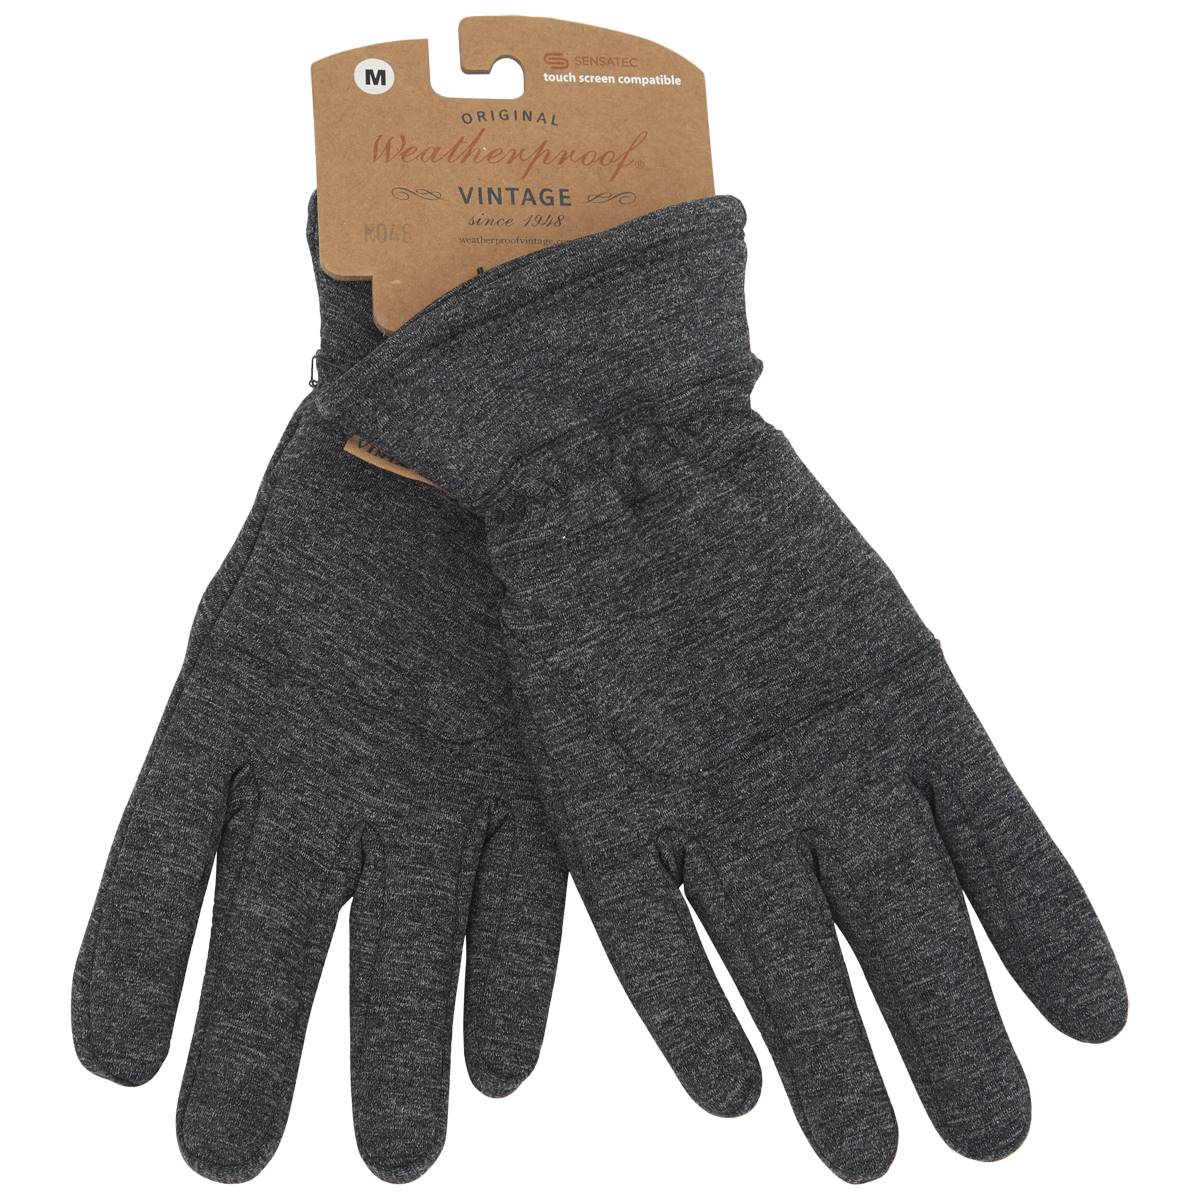 Mens Weatherproof(R) Vintage Ski Performance Gloves